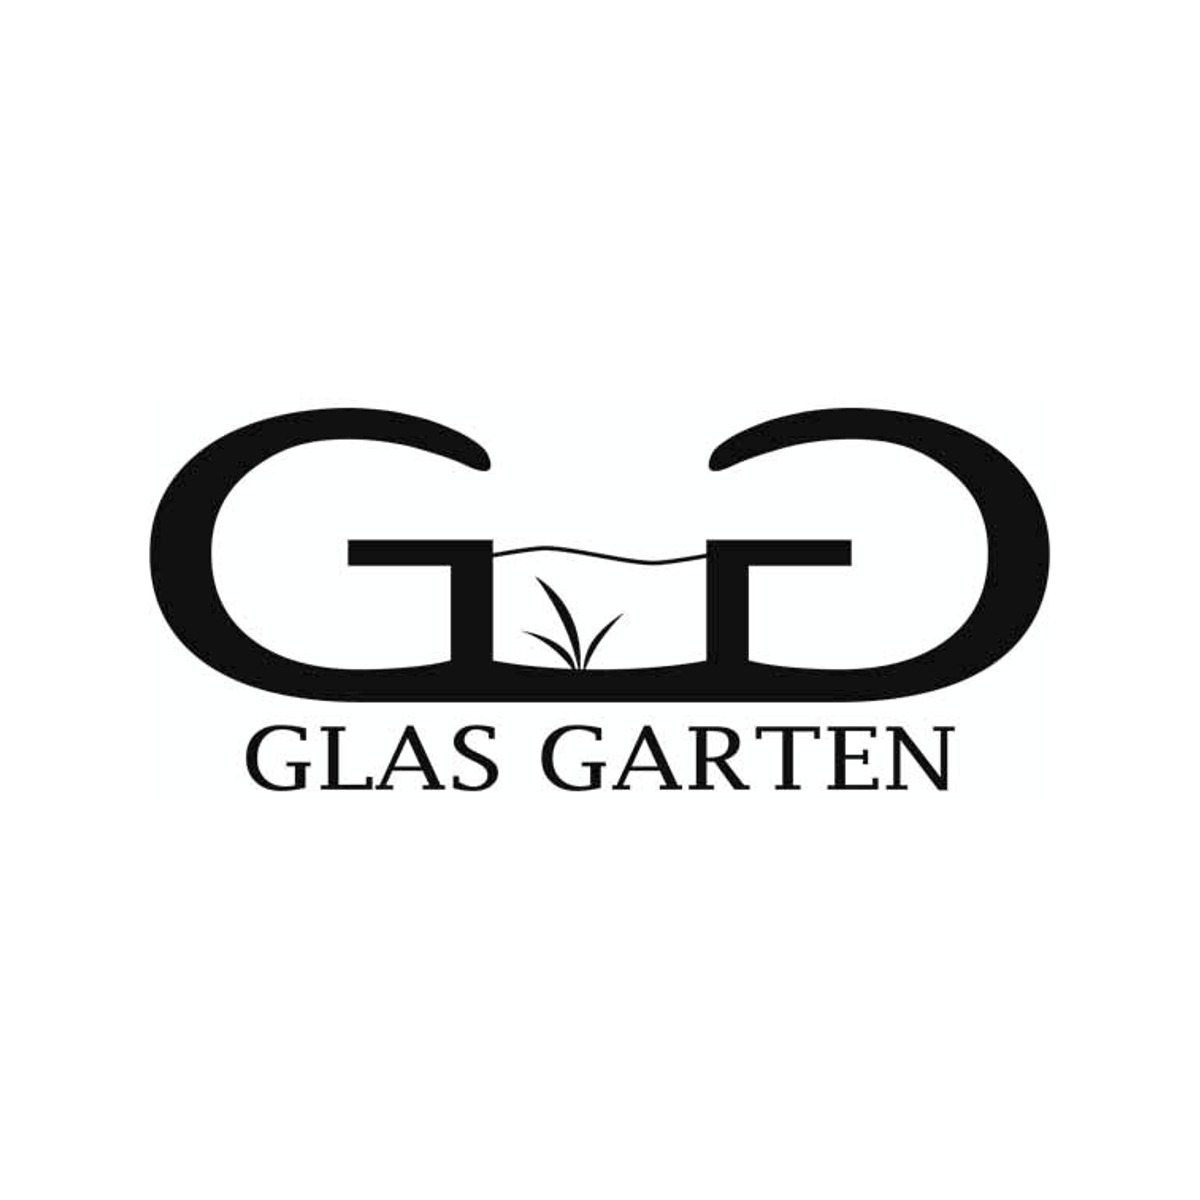 GlasGarten